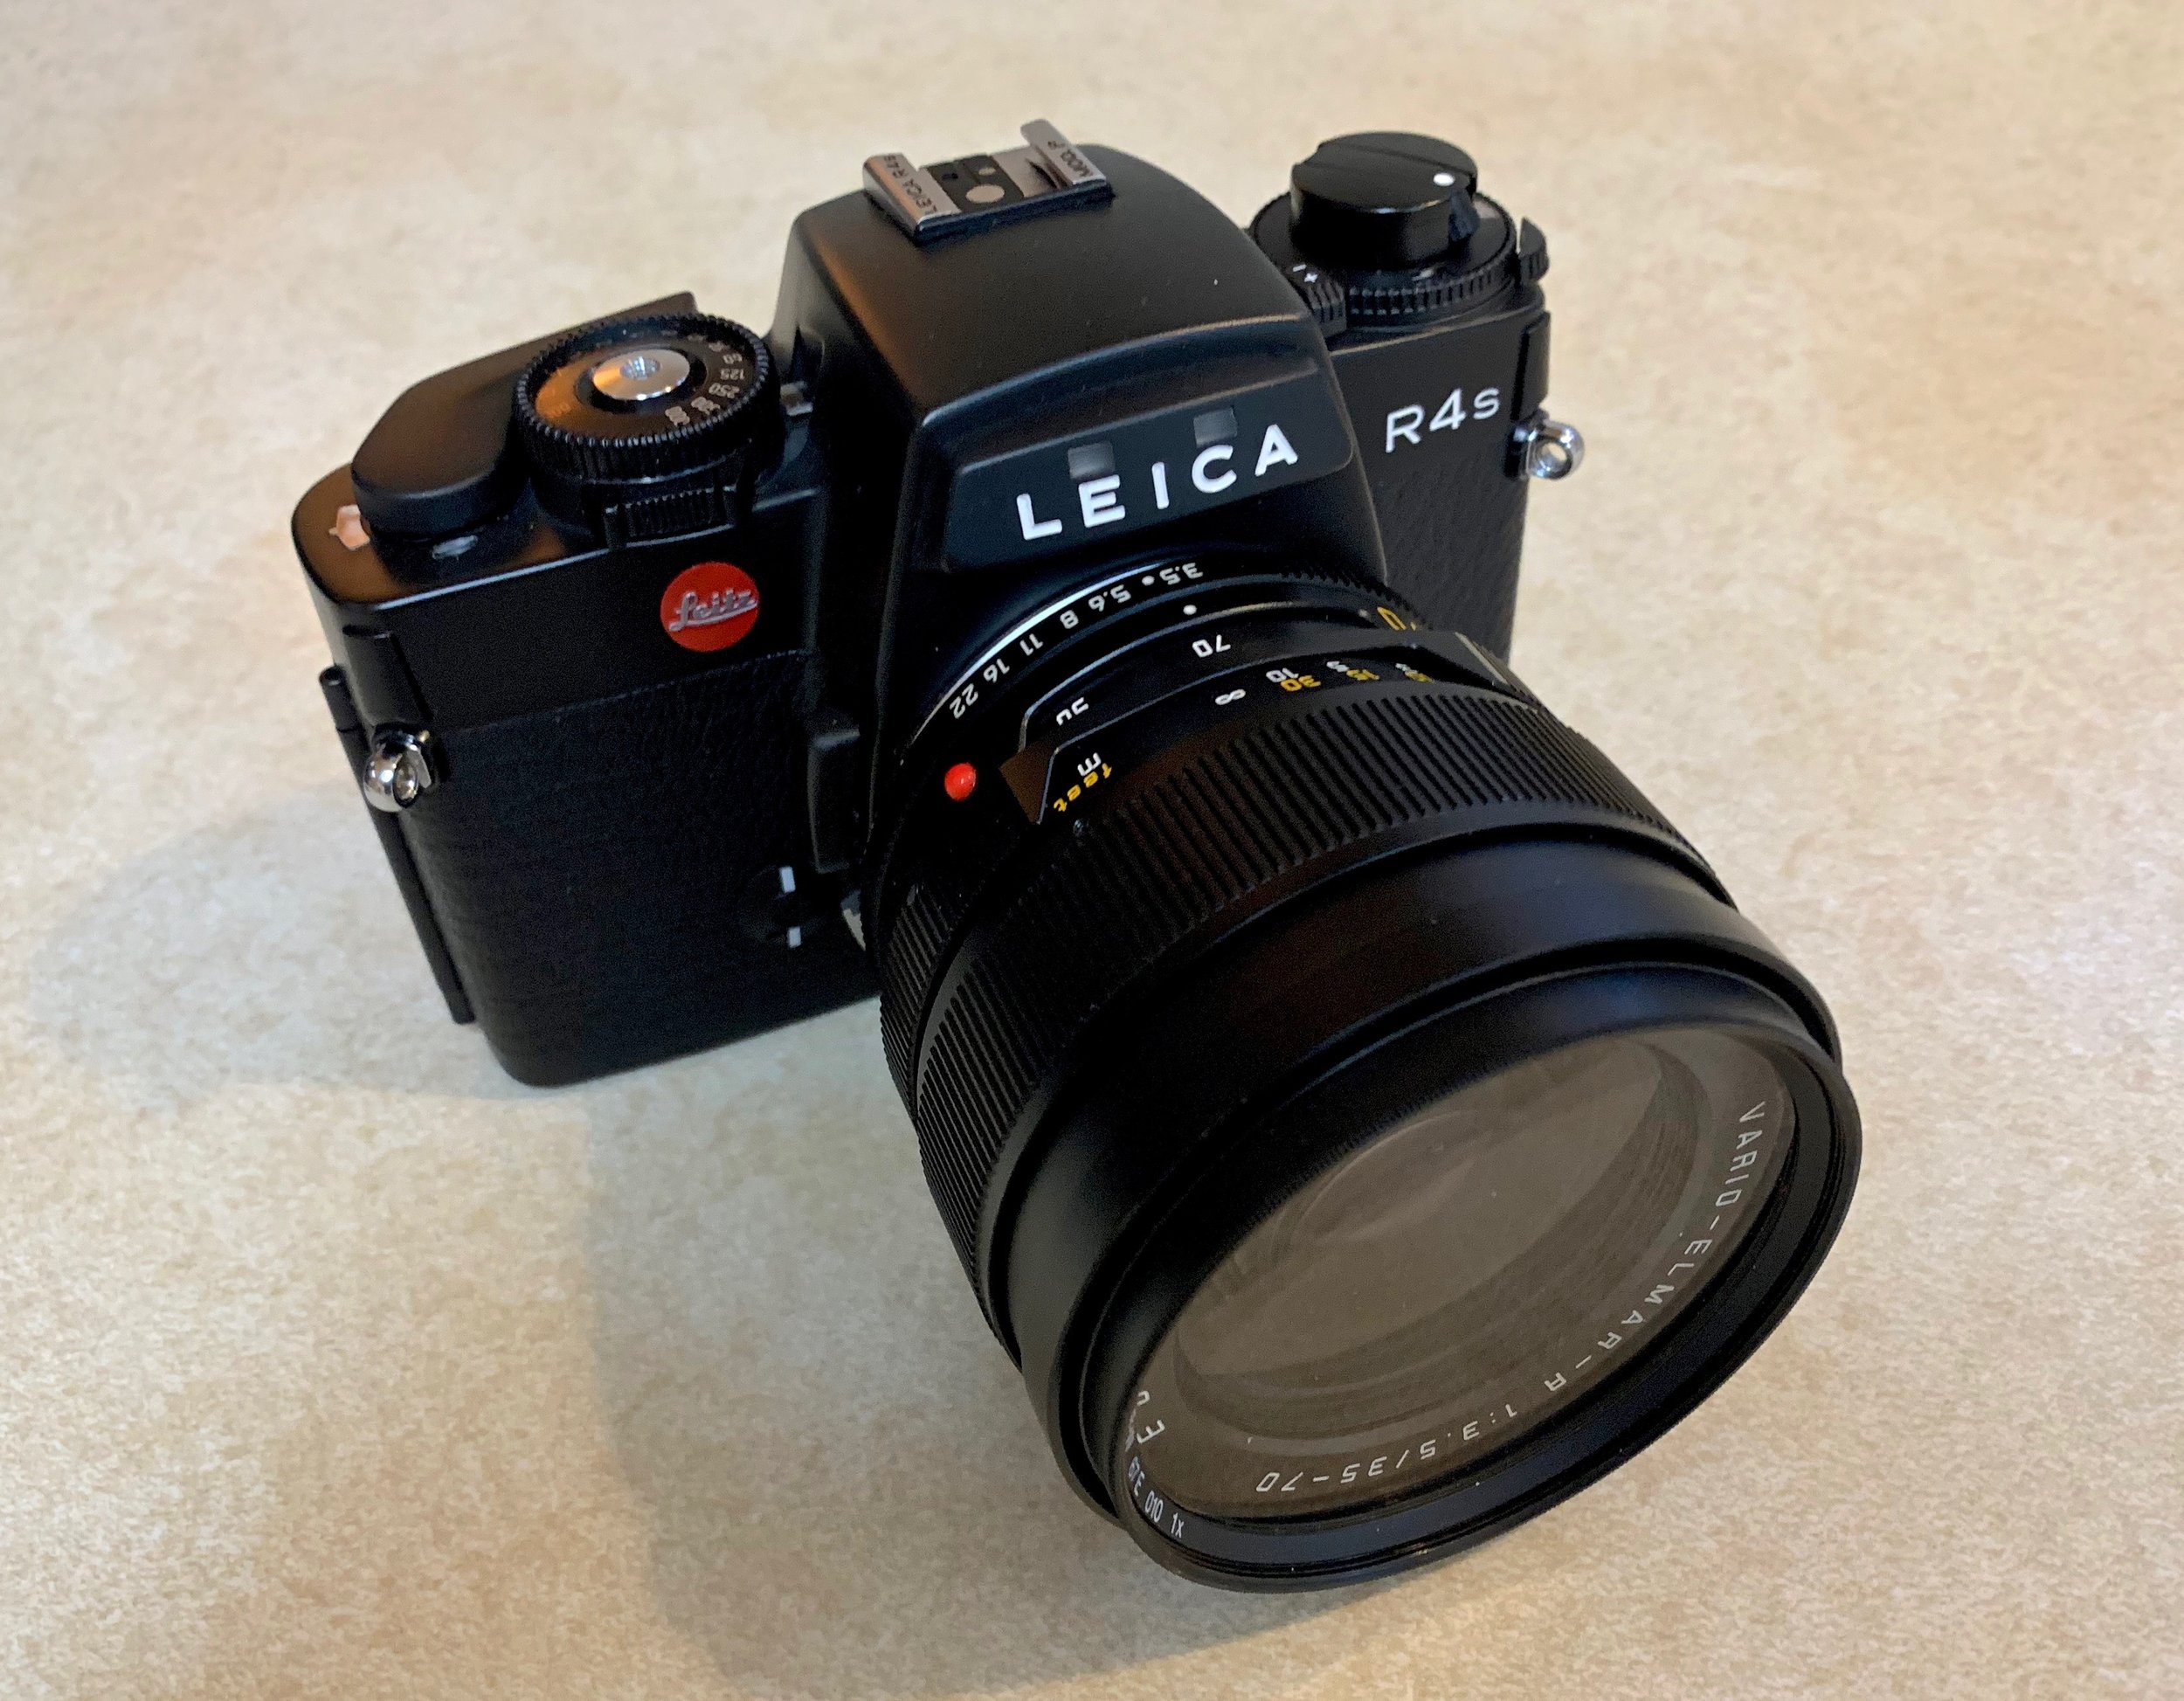 Servicing the Leica R4s MOD-P — Fogdog